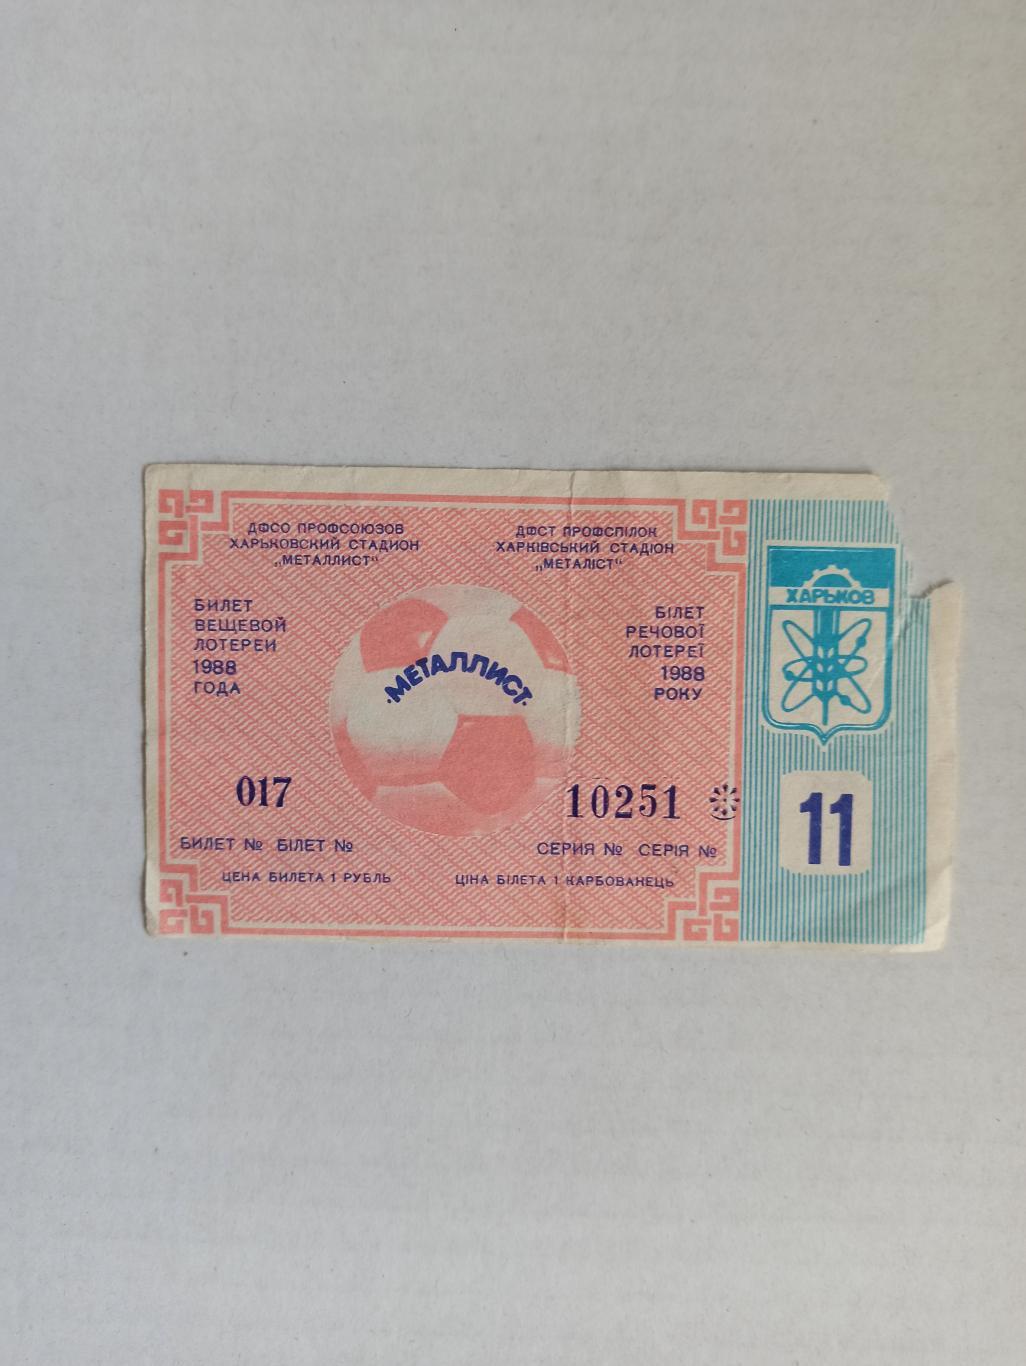 Билет, Чемпионат СССР,Металлист Харьков, 1988, билет футбольной лотереи